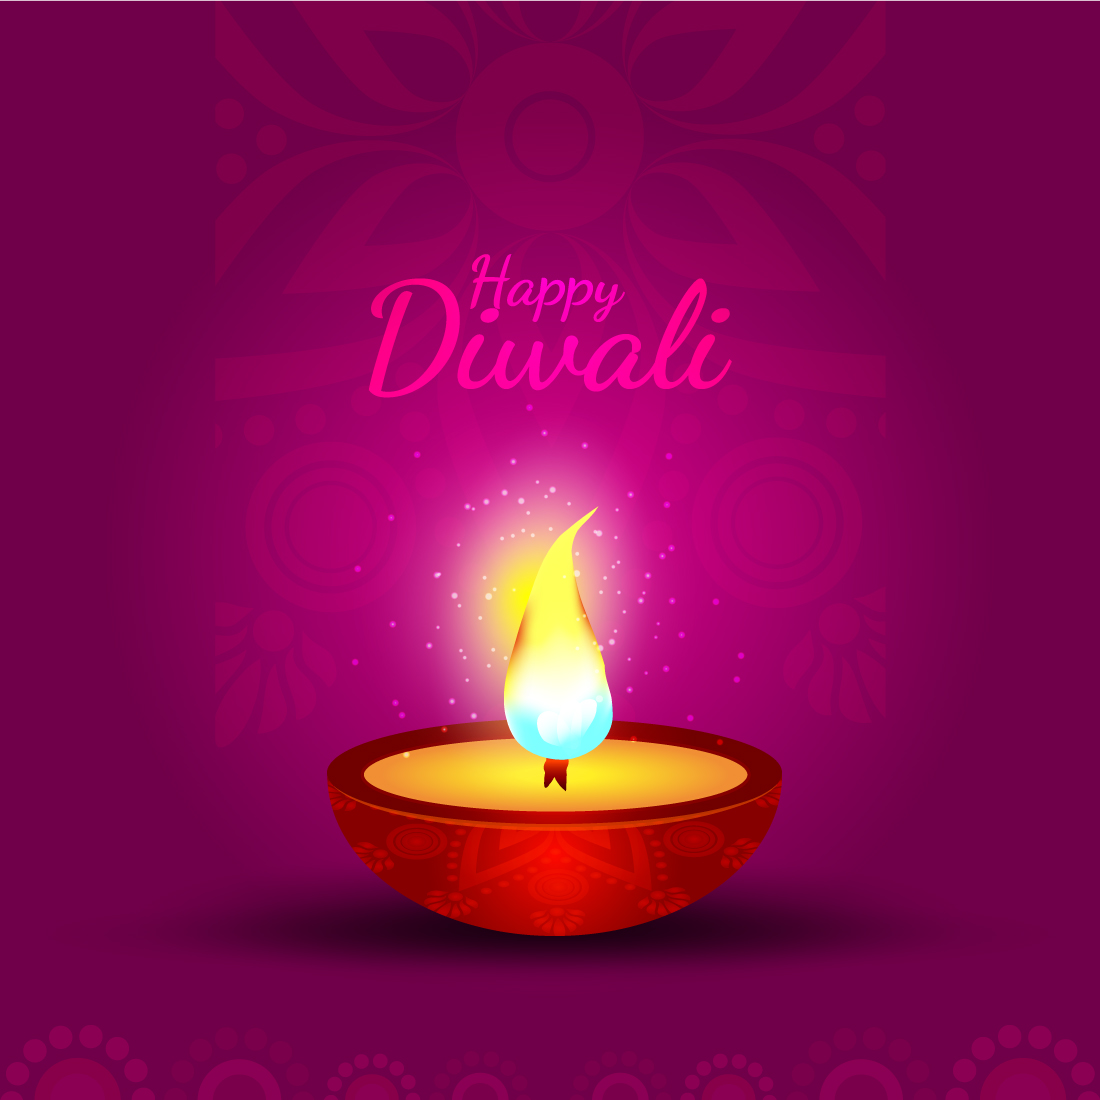 Diwali diya with a lit candle on a purple background.